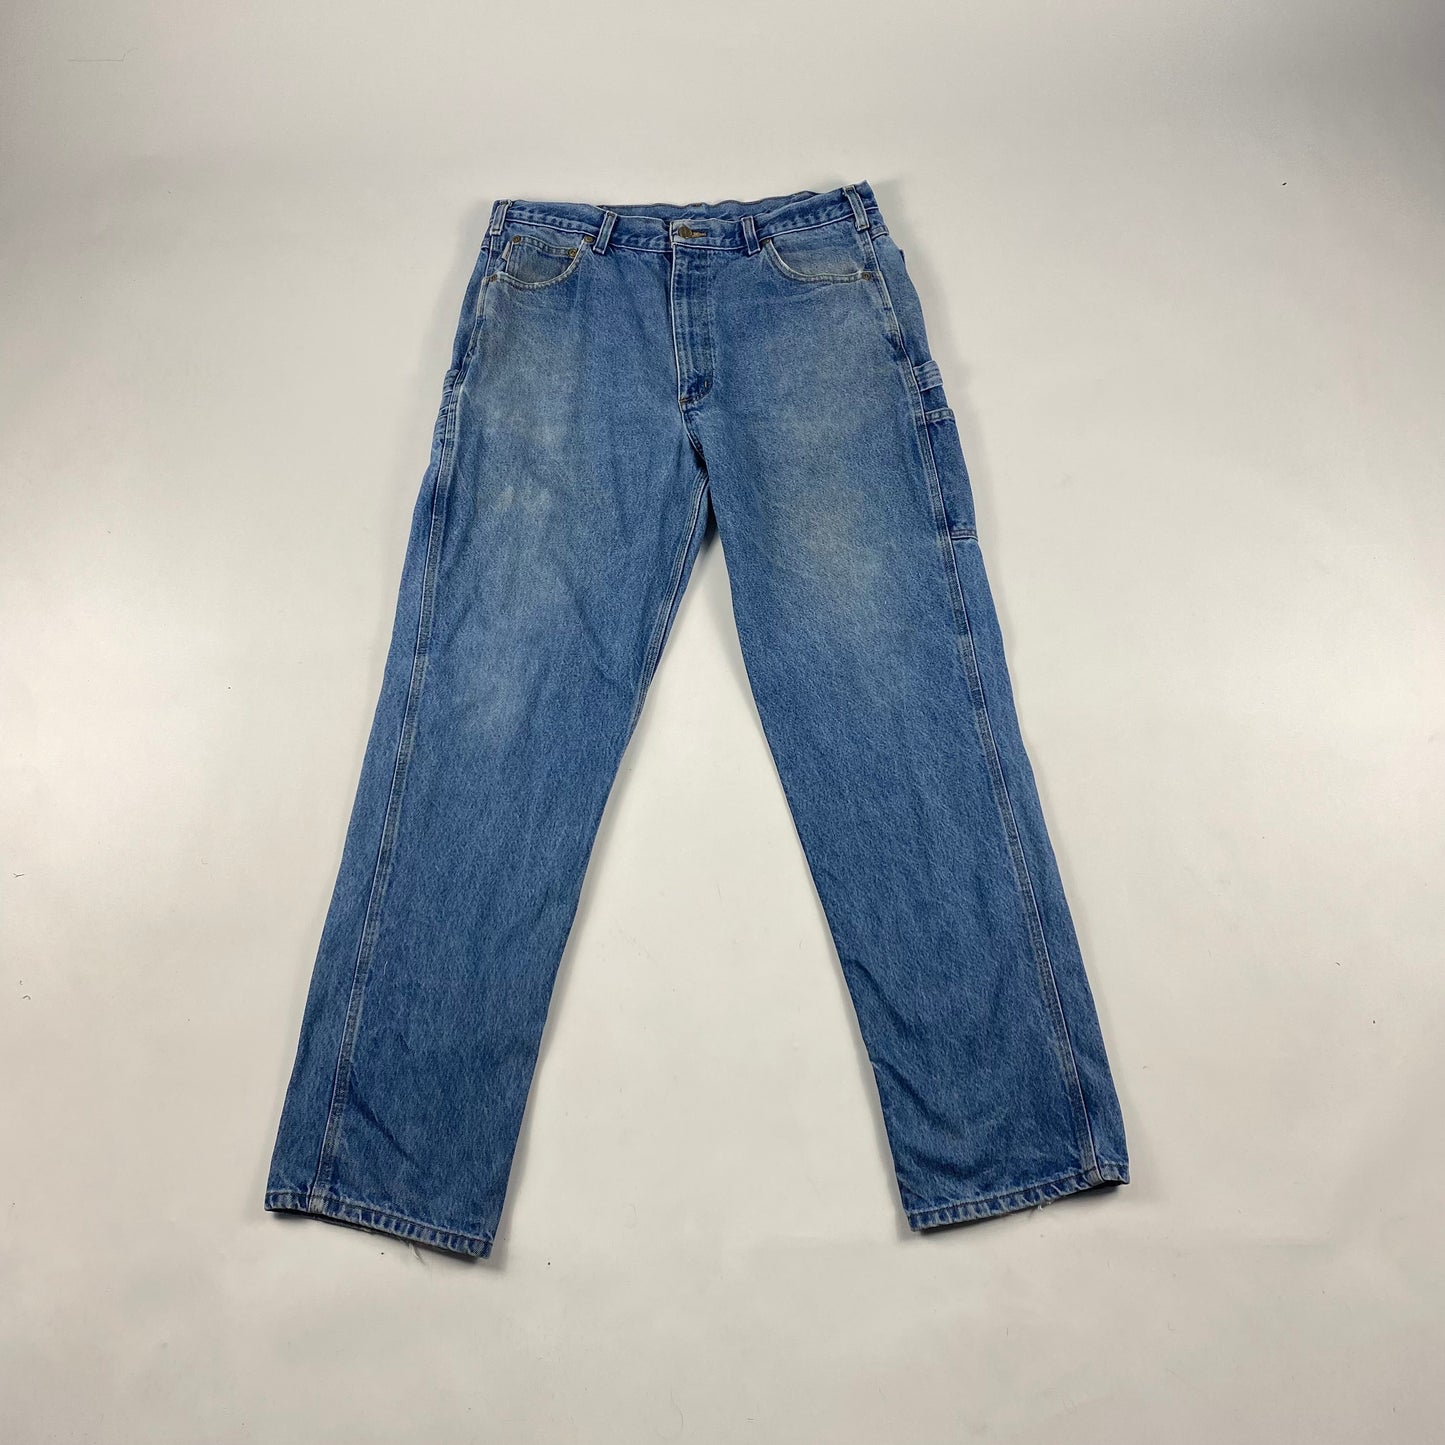 Carhartt Jeans (38x36)